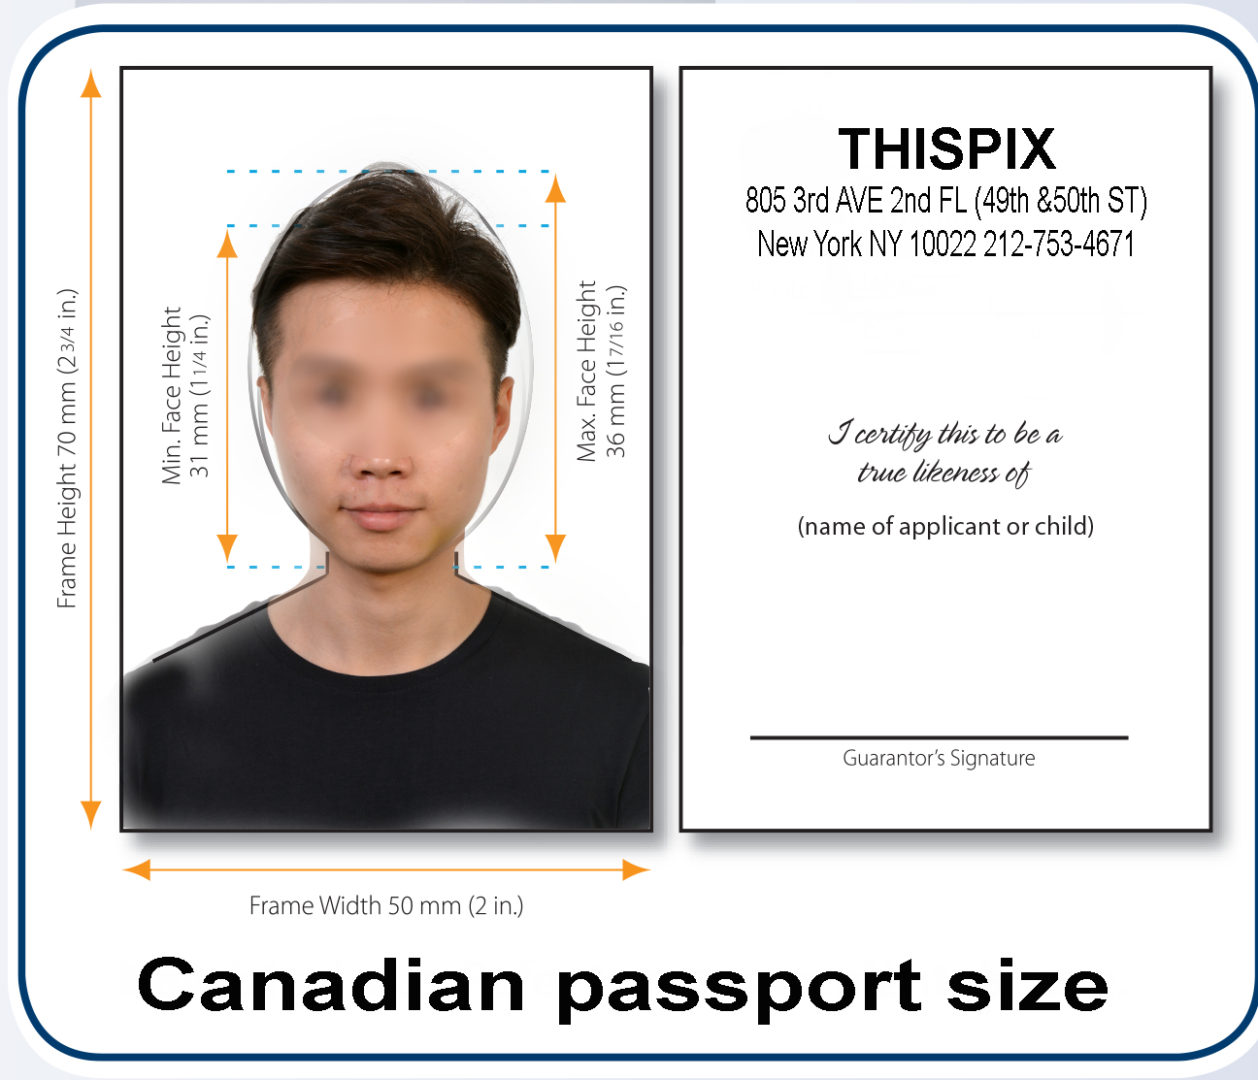 cvs passport photos near me